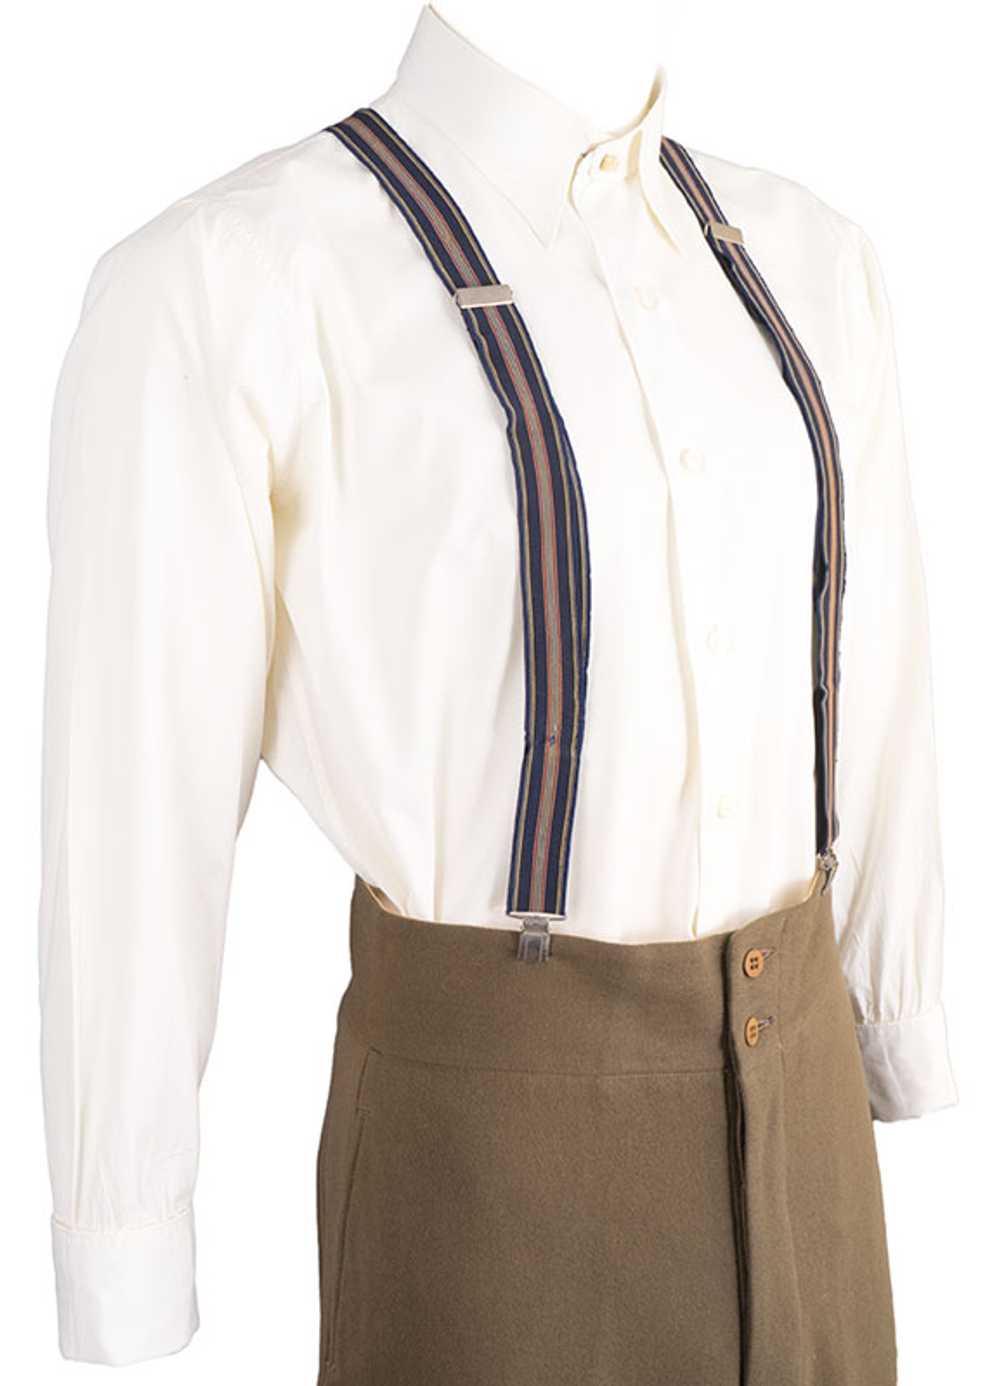 1940s Collarless Dress Shirt - image 1